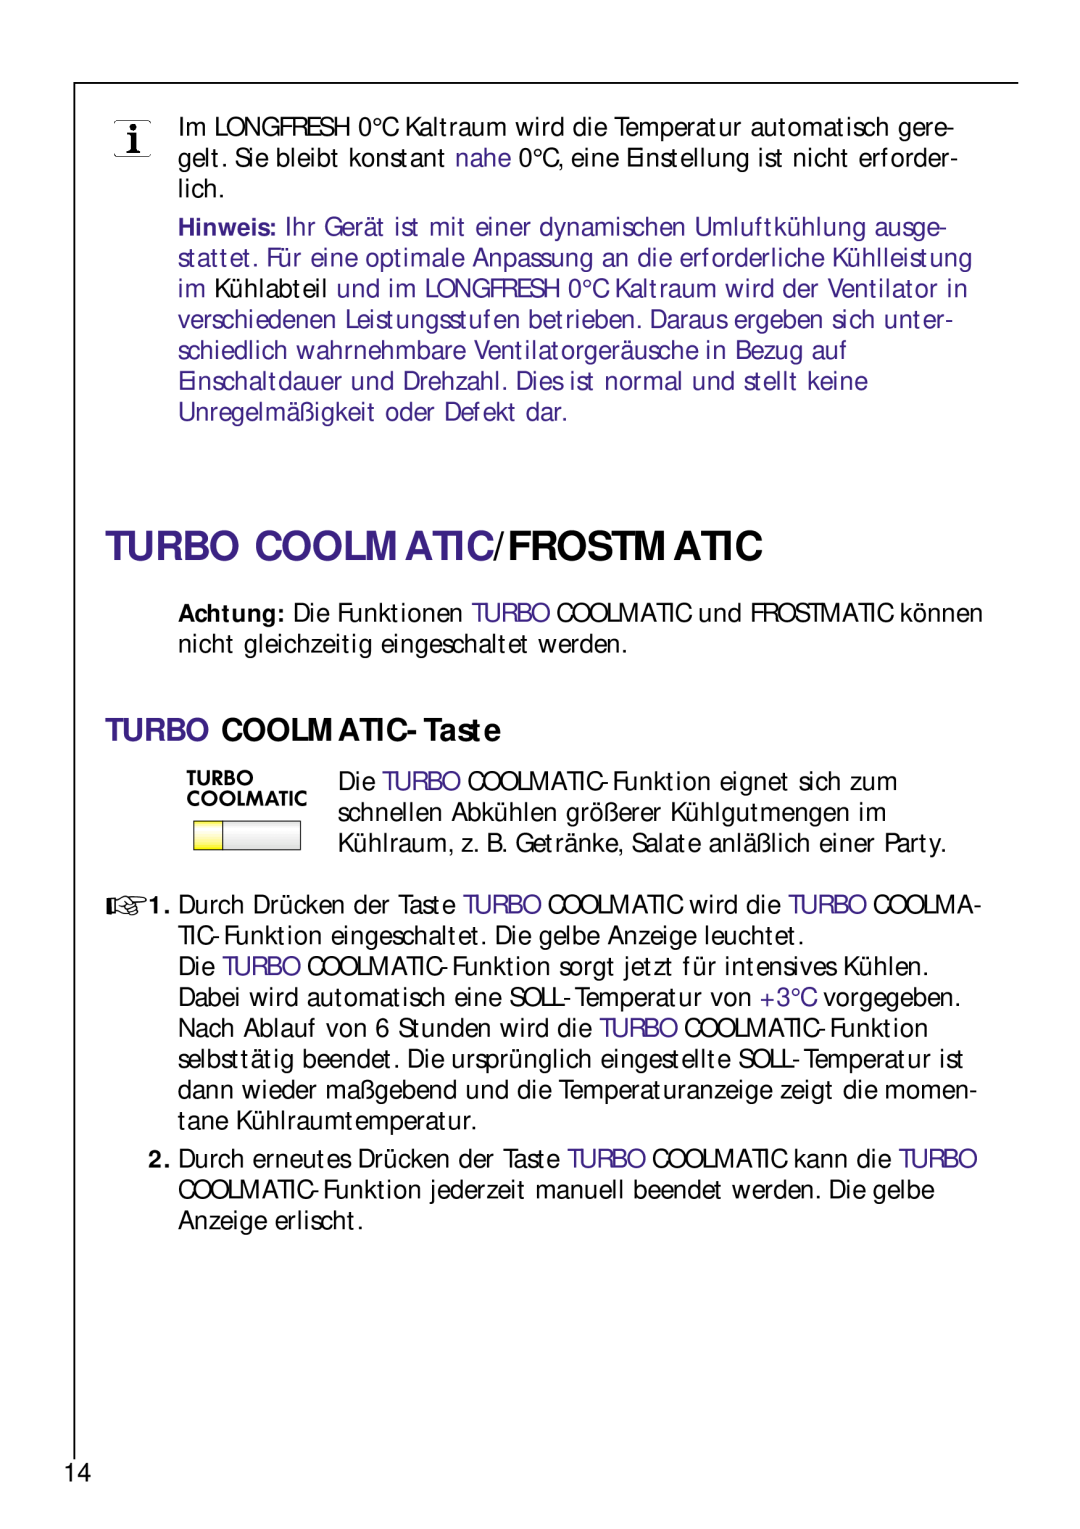 Electrolux Z 9 18 42-4 I user manual Turbo Coolmatic/Frostmatic, TURBO COOLMATIC-Taste 